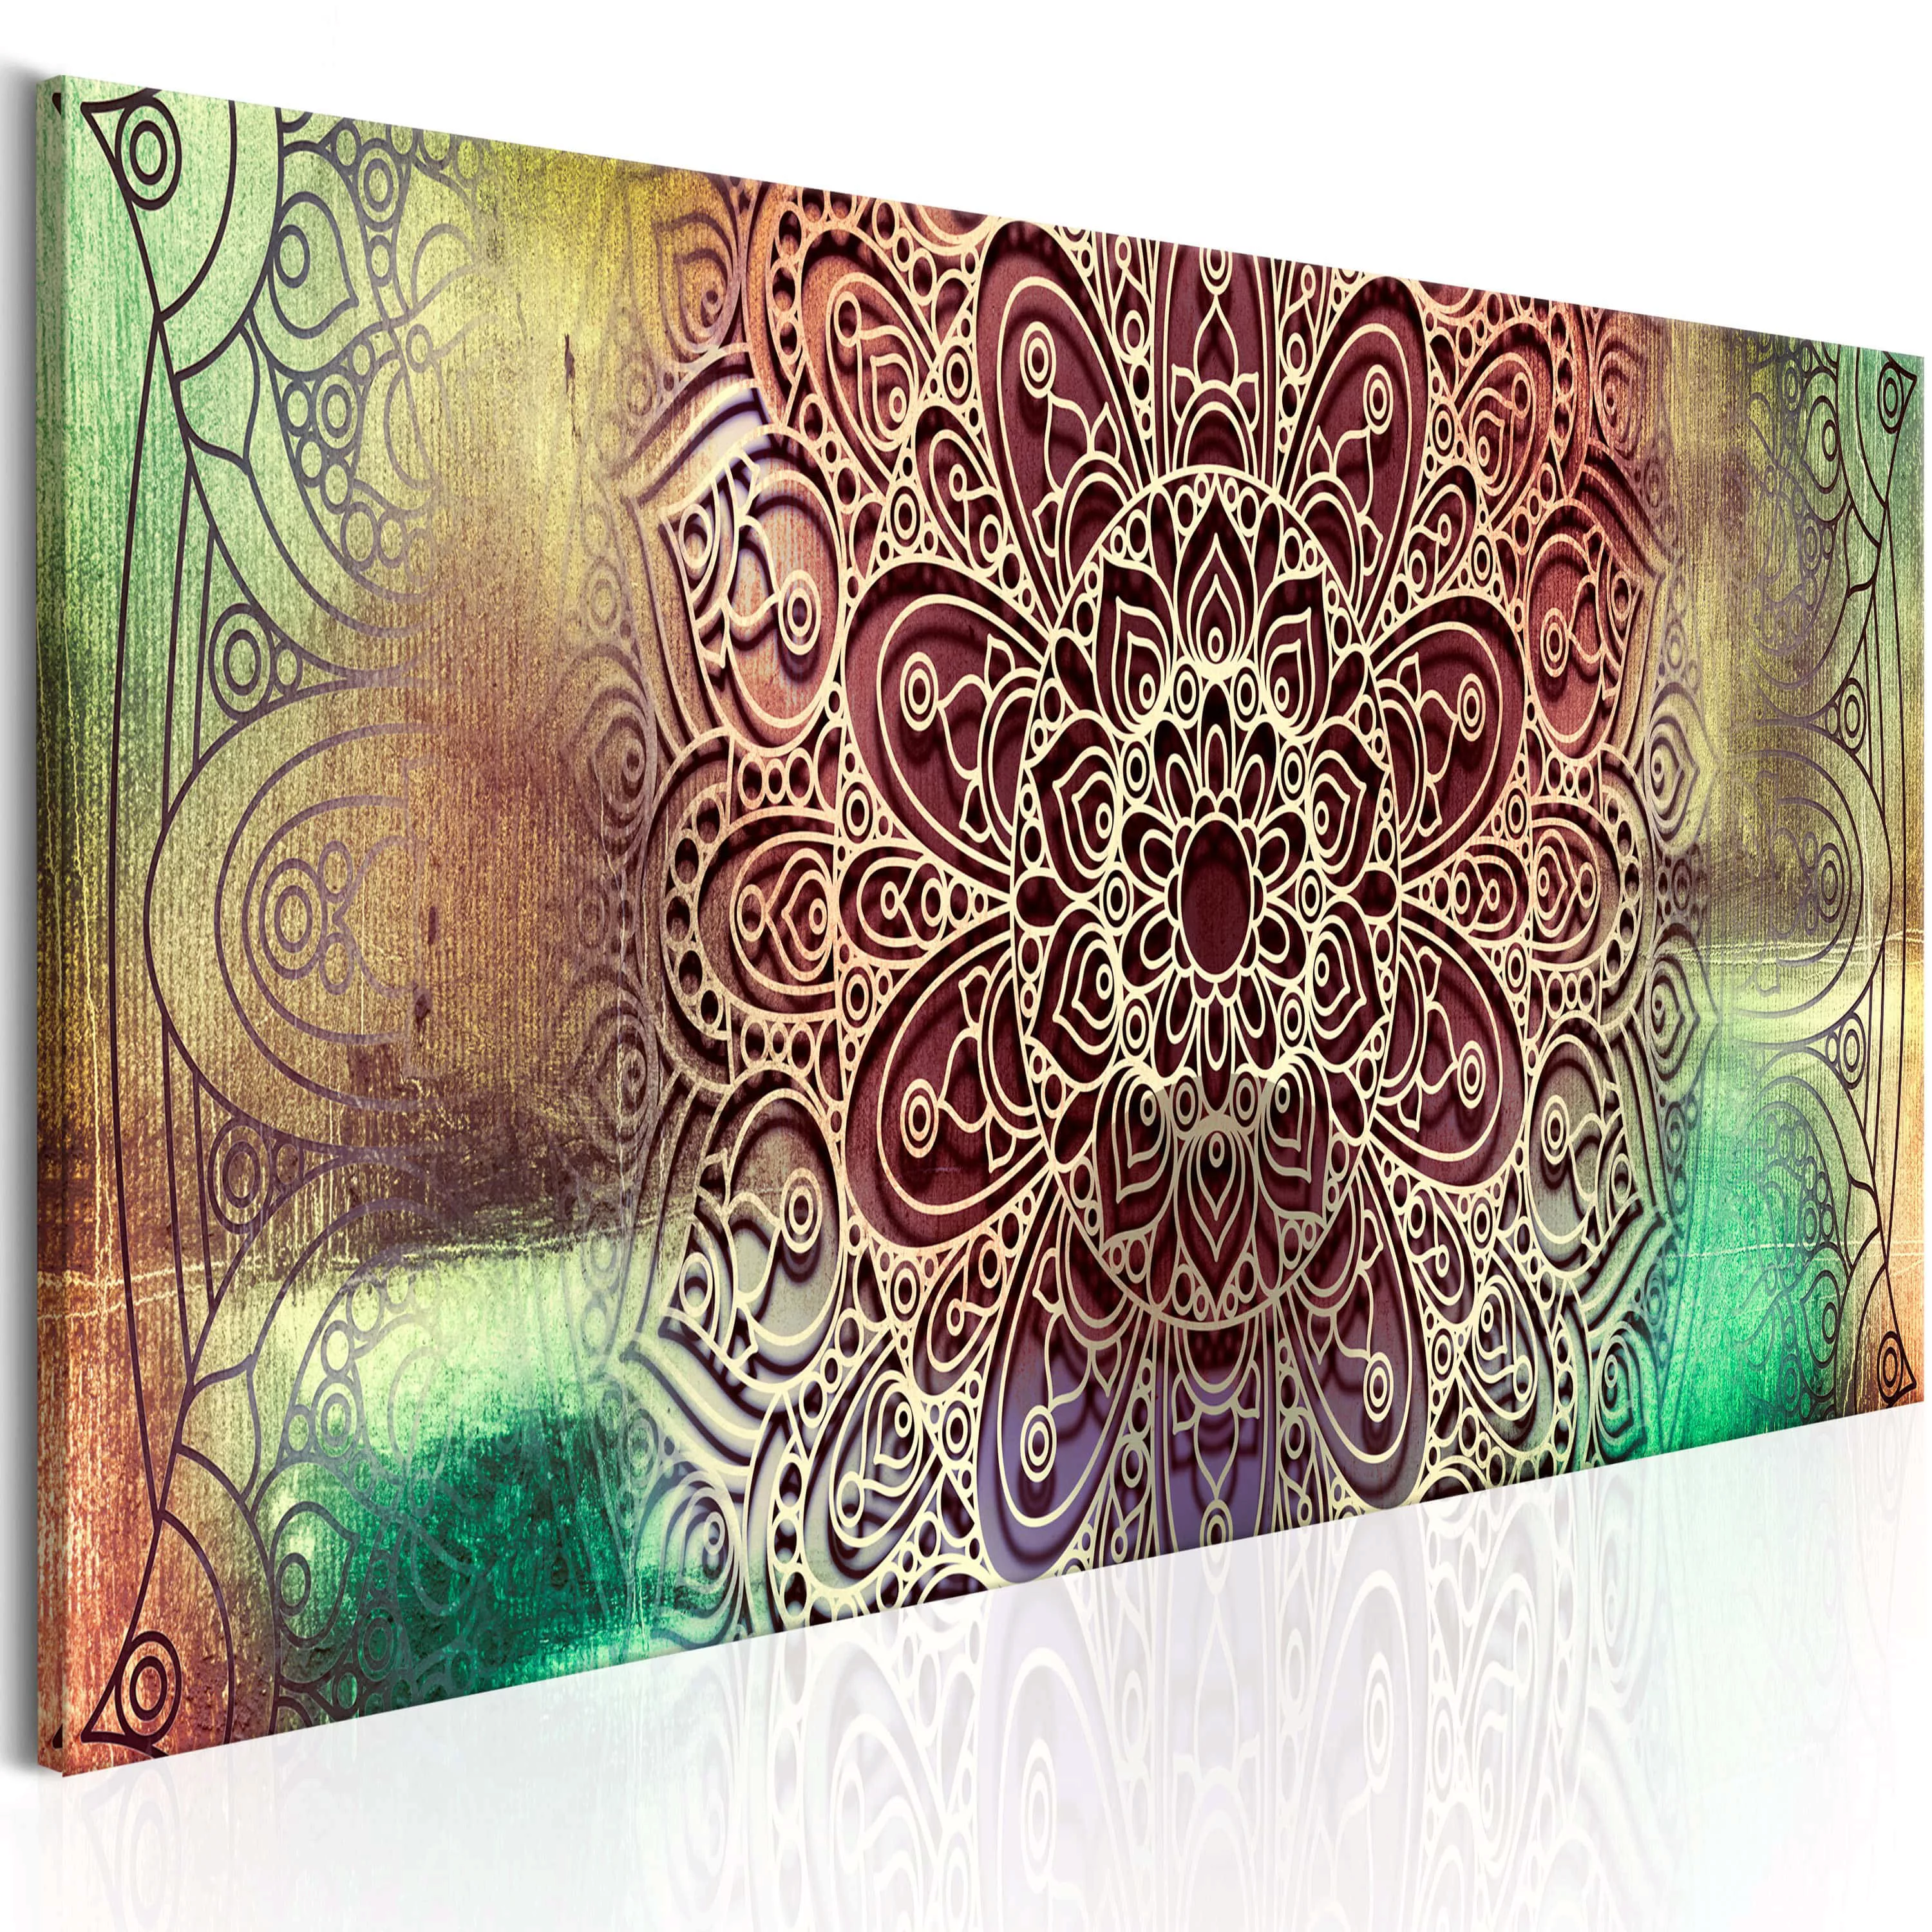 Wandbild - Colourful Mandala günstig online kaufen